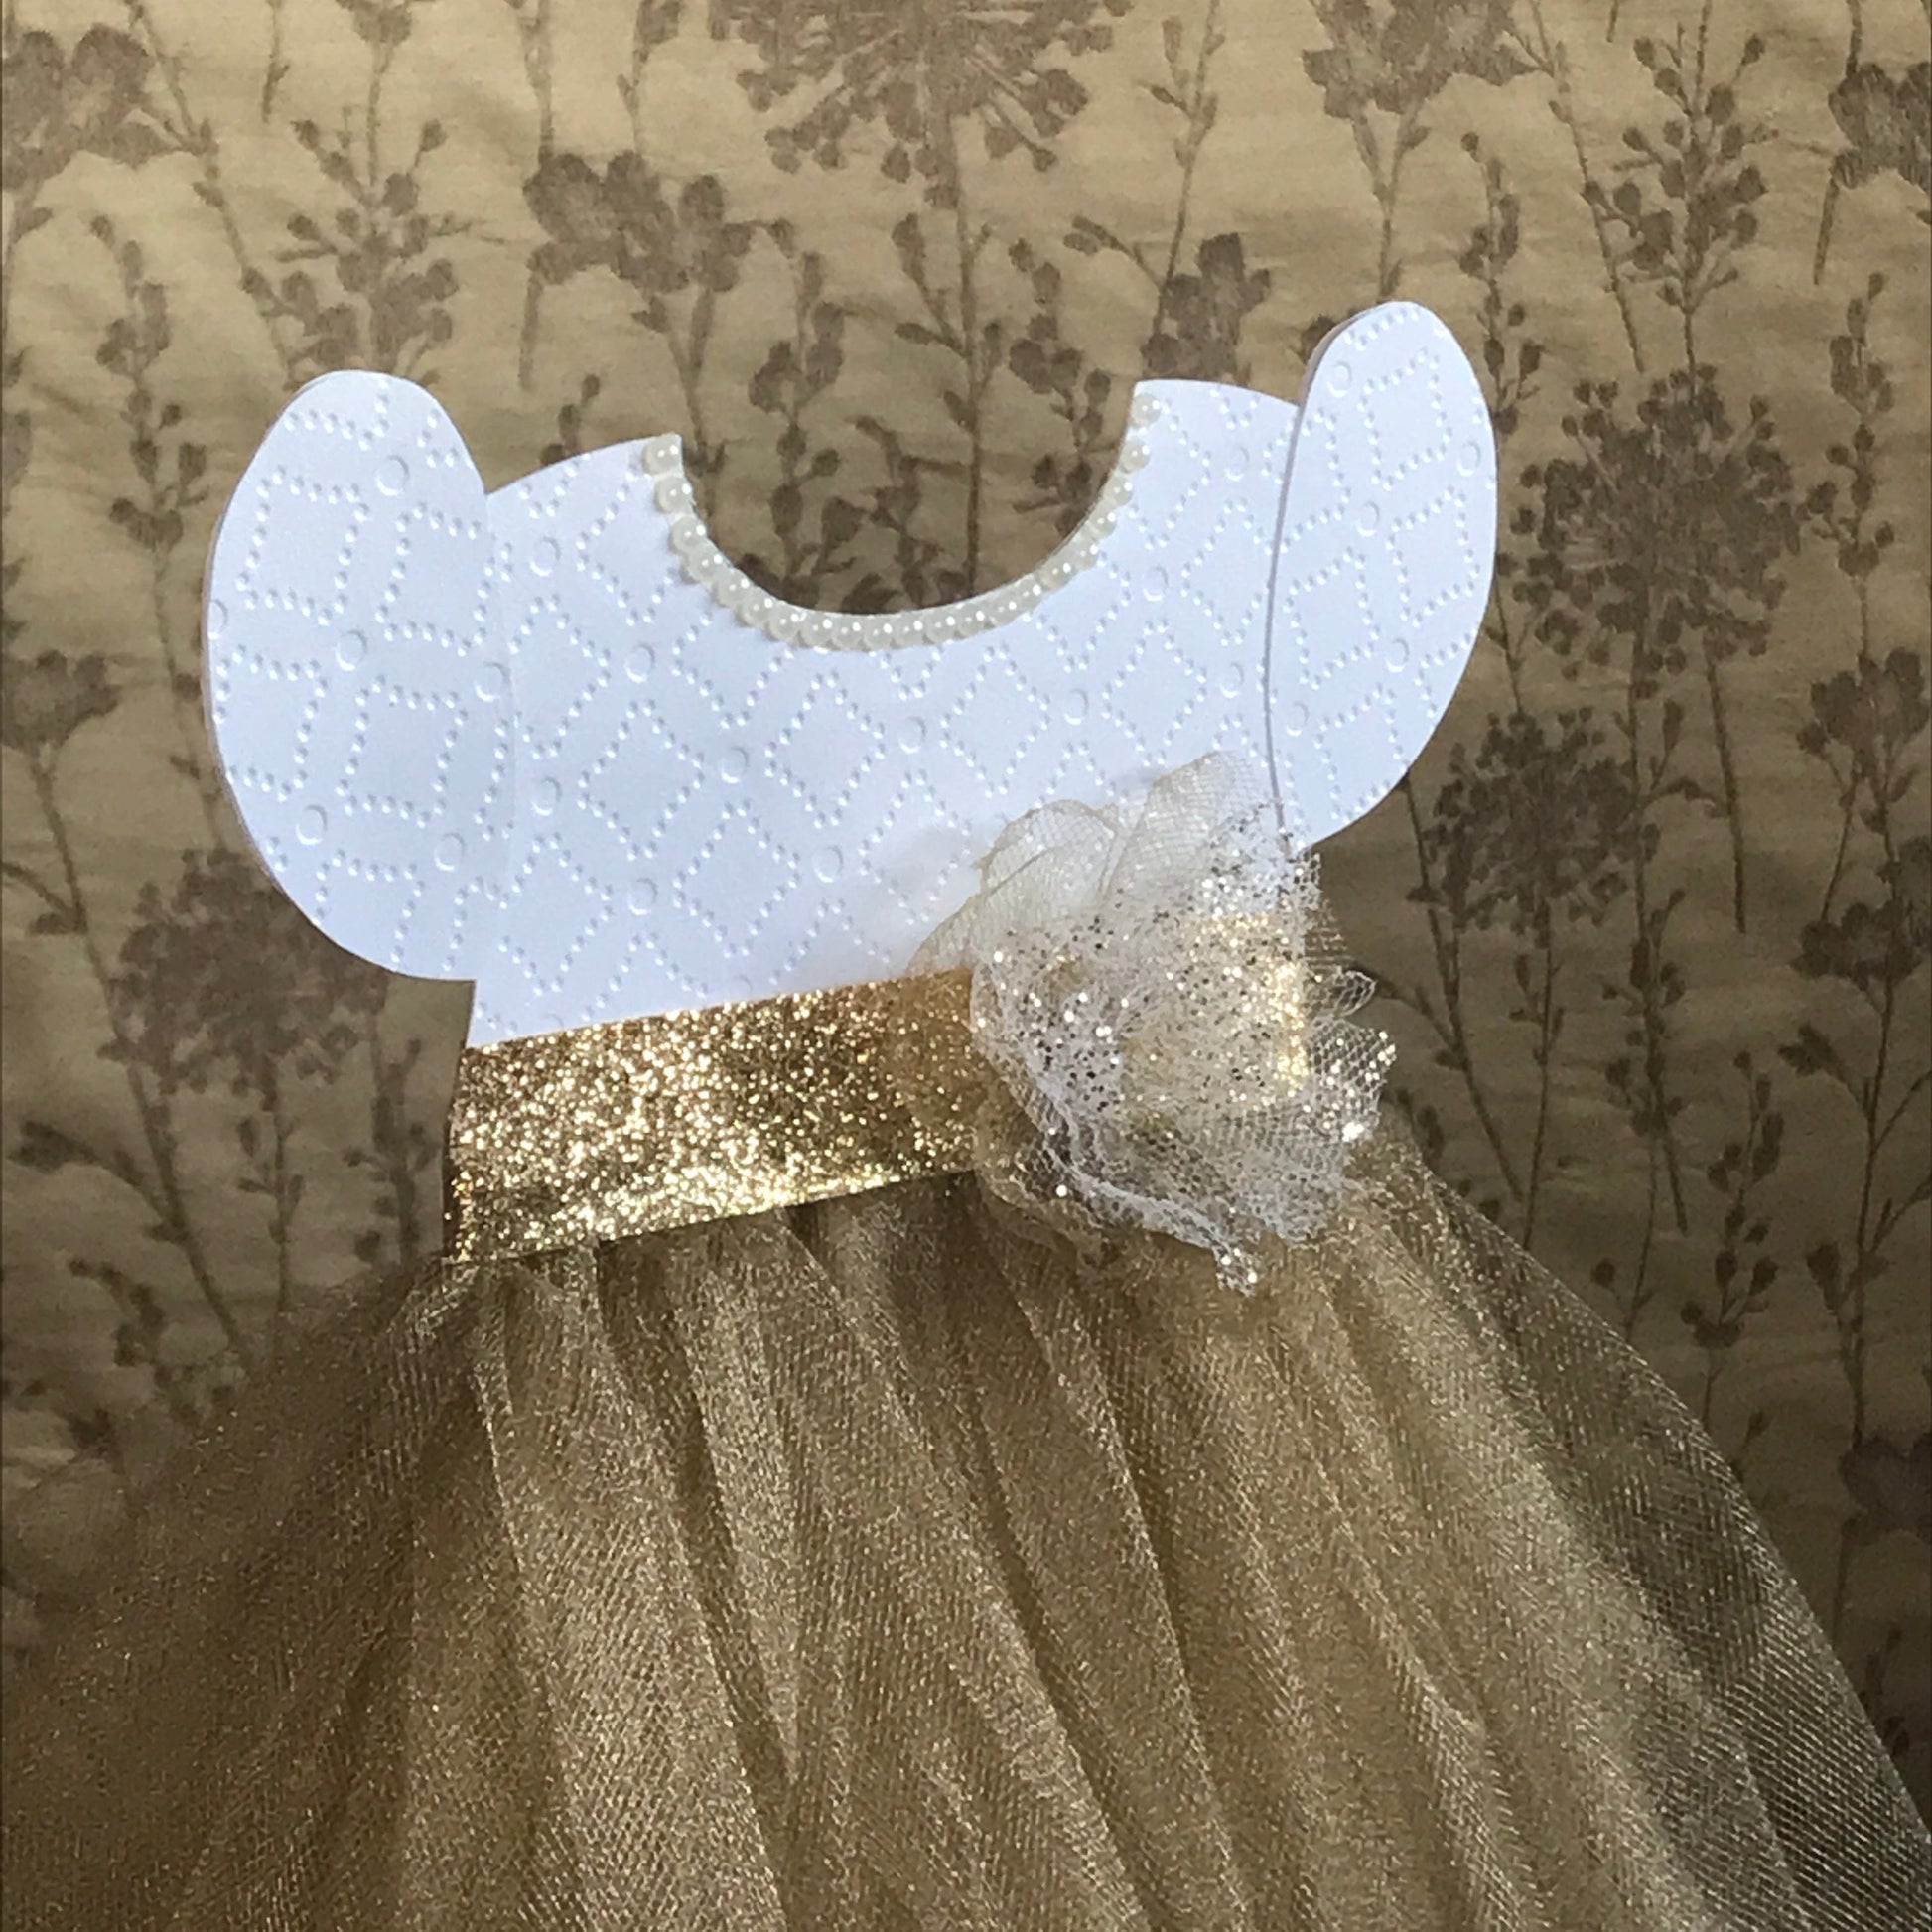 Adriana Ortiz Designs Tutu Dress Centerpiece Gold tutu dress centerpiece for baby shower, birthday party or baptism.